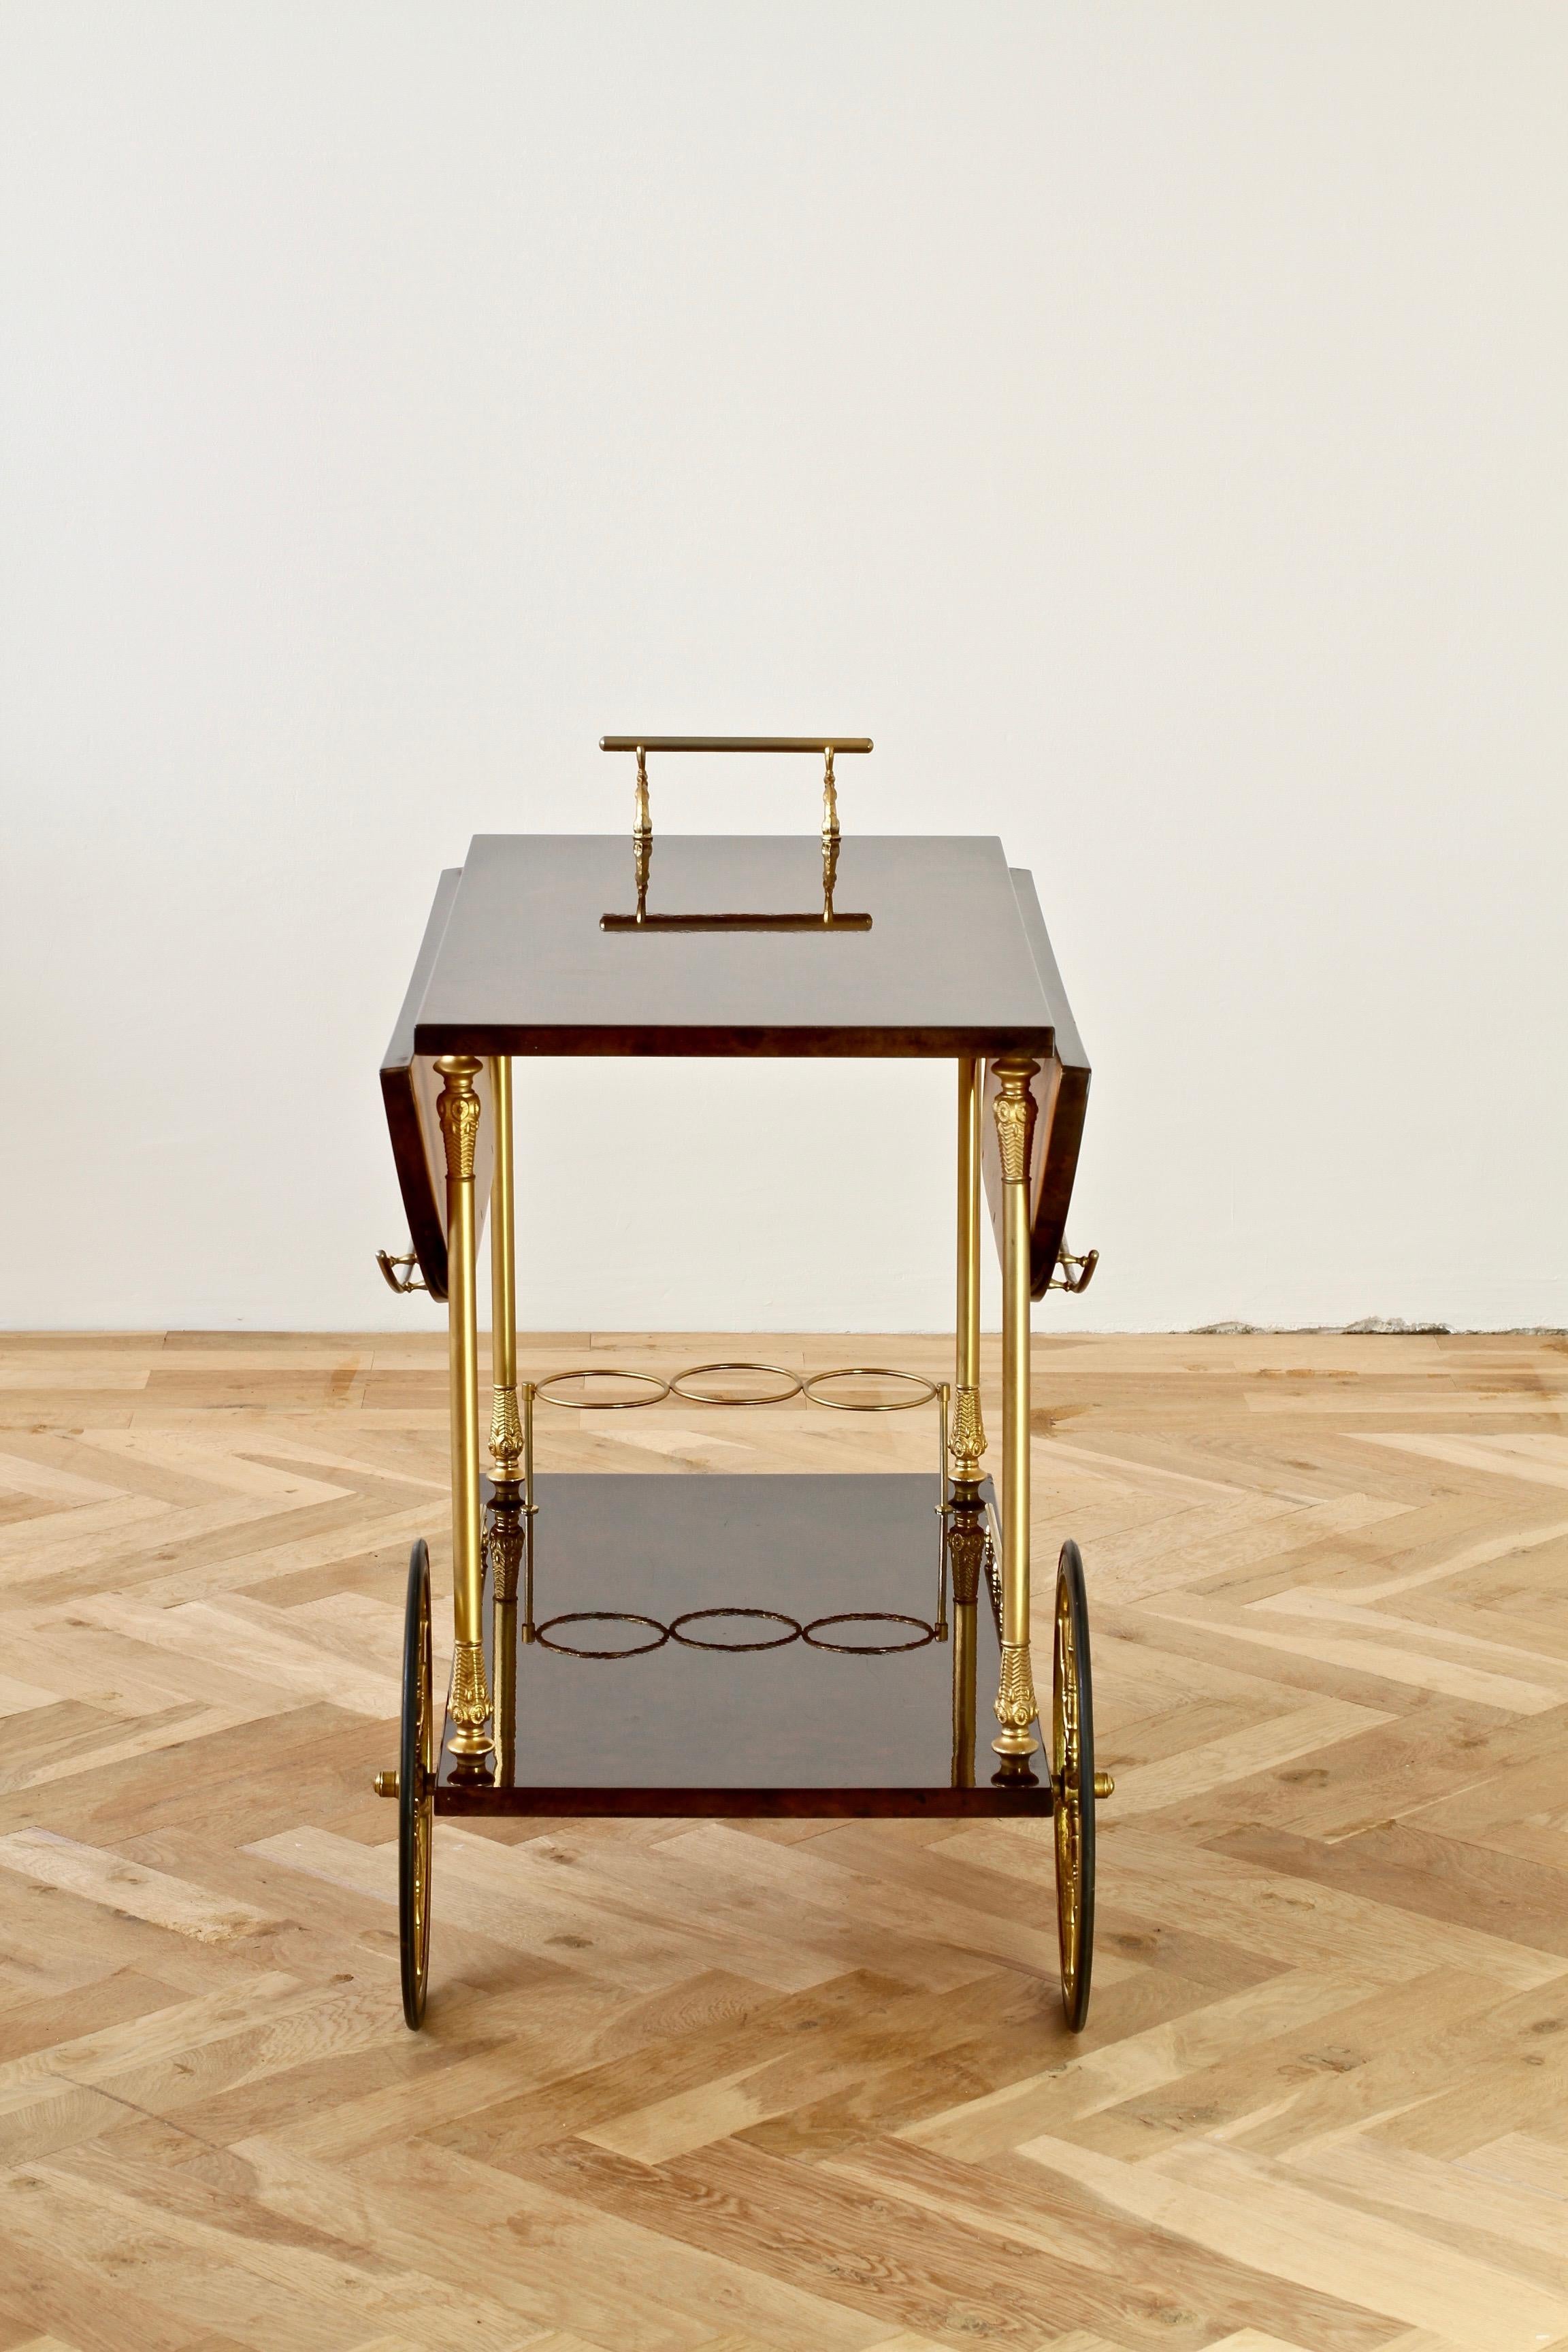 Metal Aldo Tura 1960s Bar Cart, Tea Trolley or Drinks Stand in Brown Italian Leather